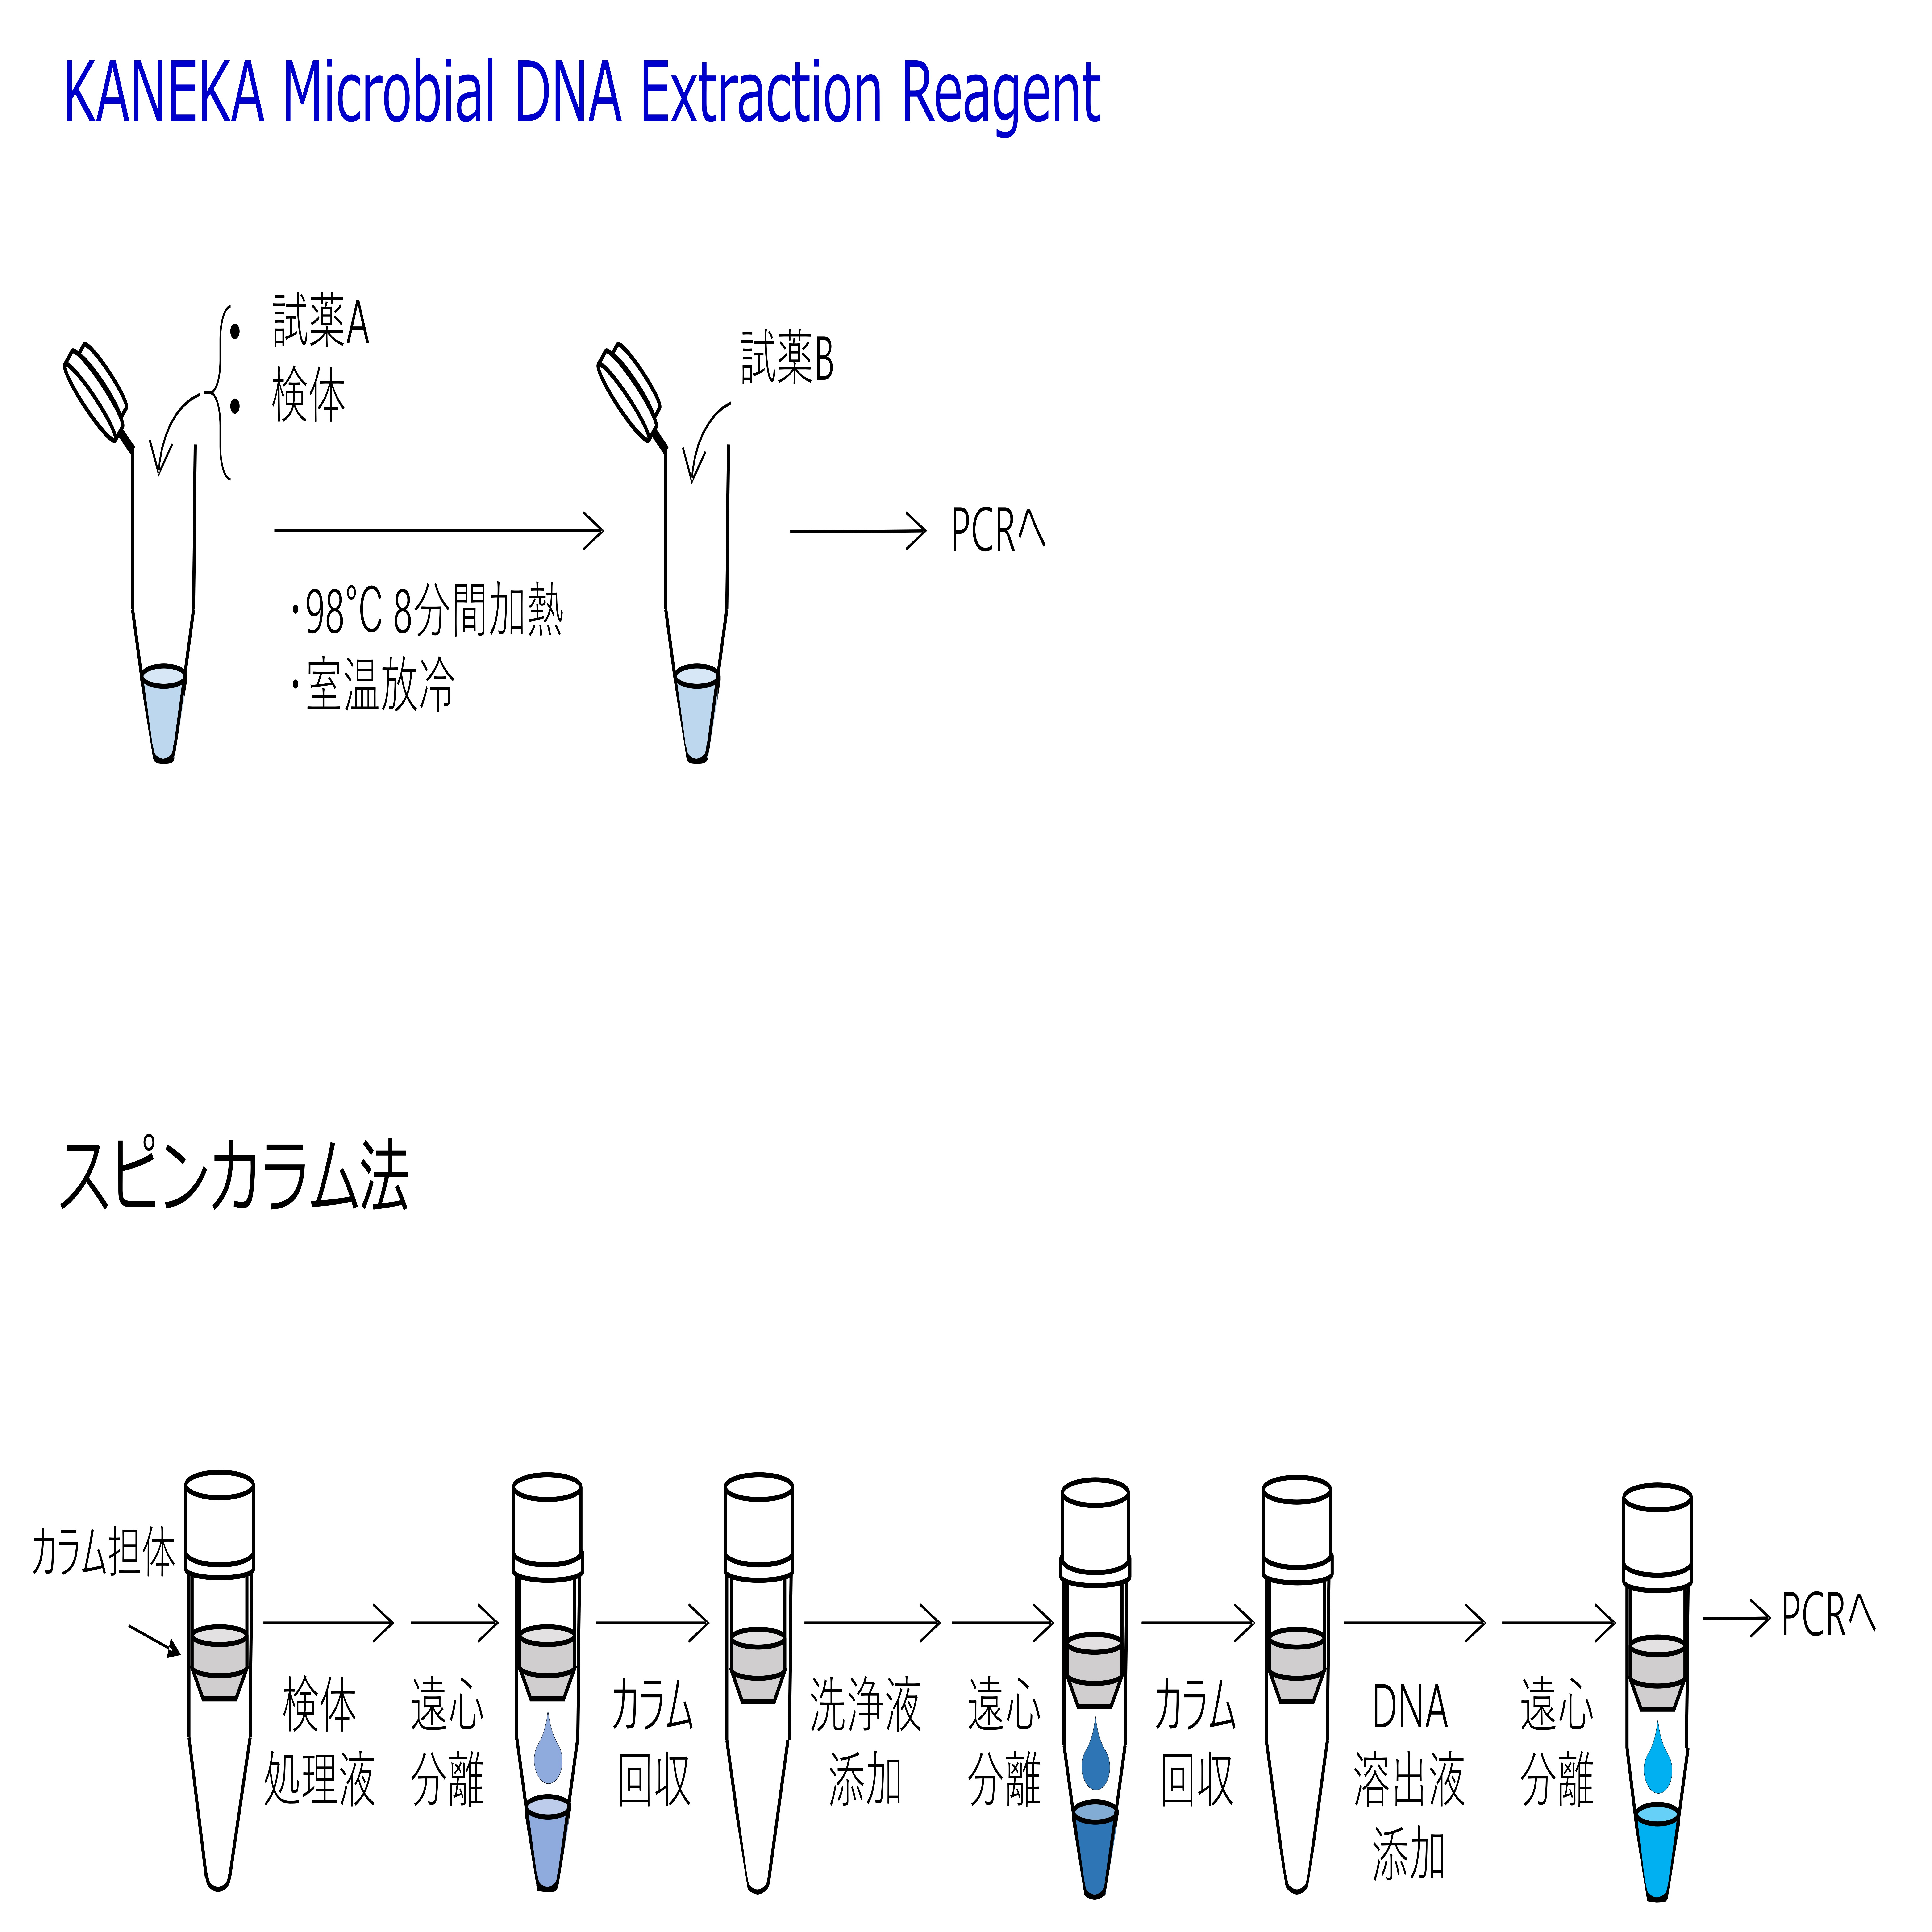 KANEKA Microbial DNA Extraction Reagentとスピンカラム法の比較